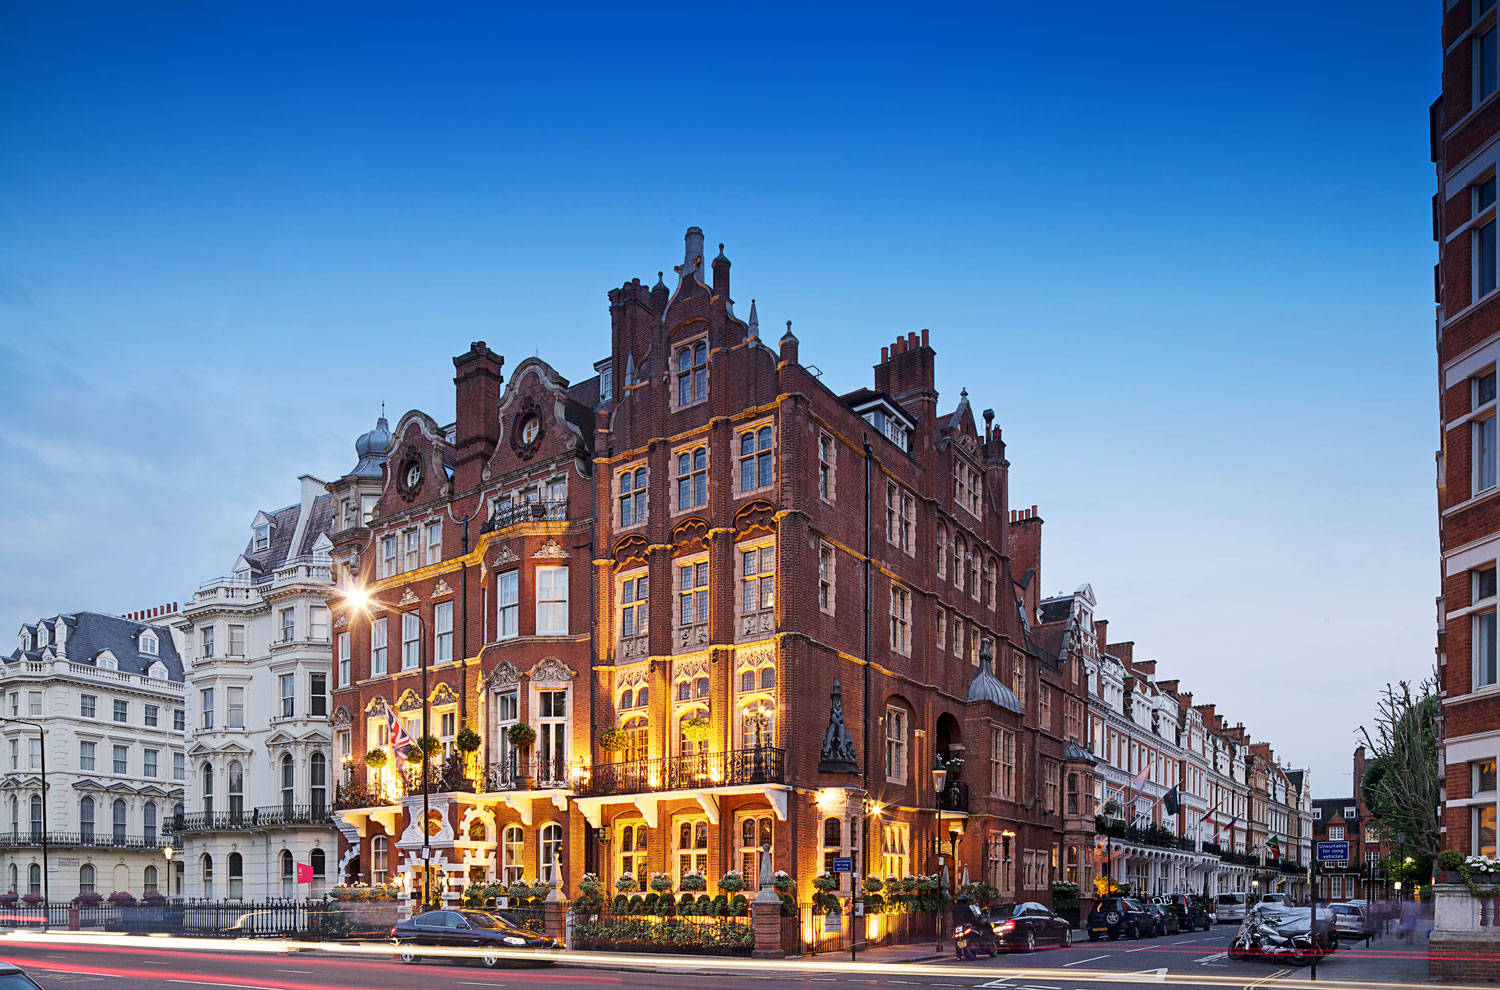 THE MILESTONE HOTEL & RESIDENCES, LONDON